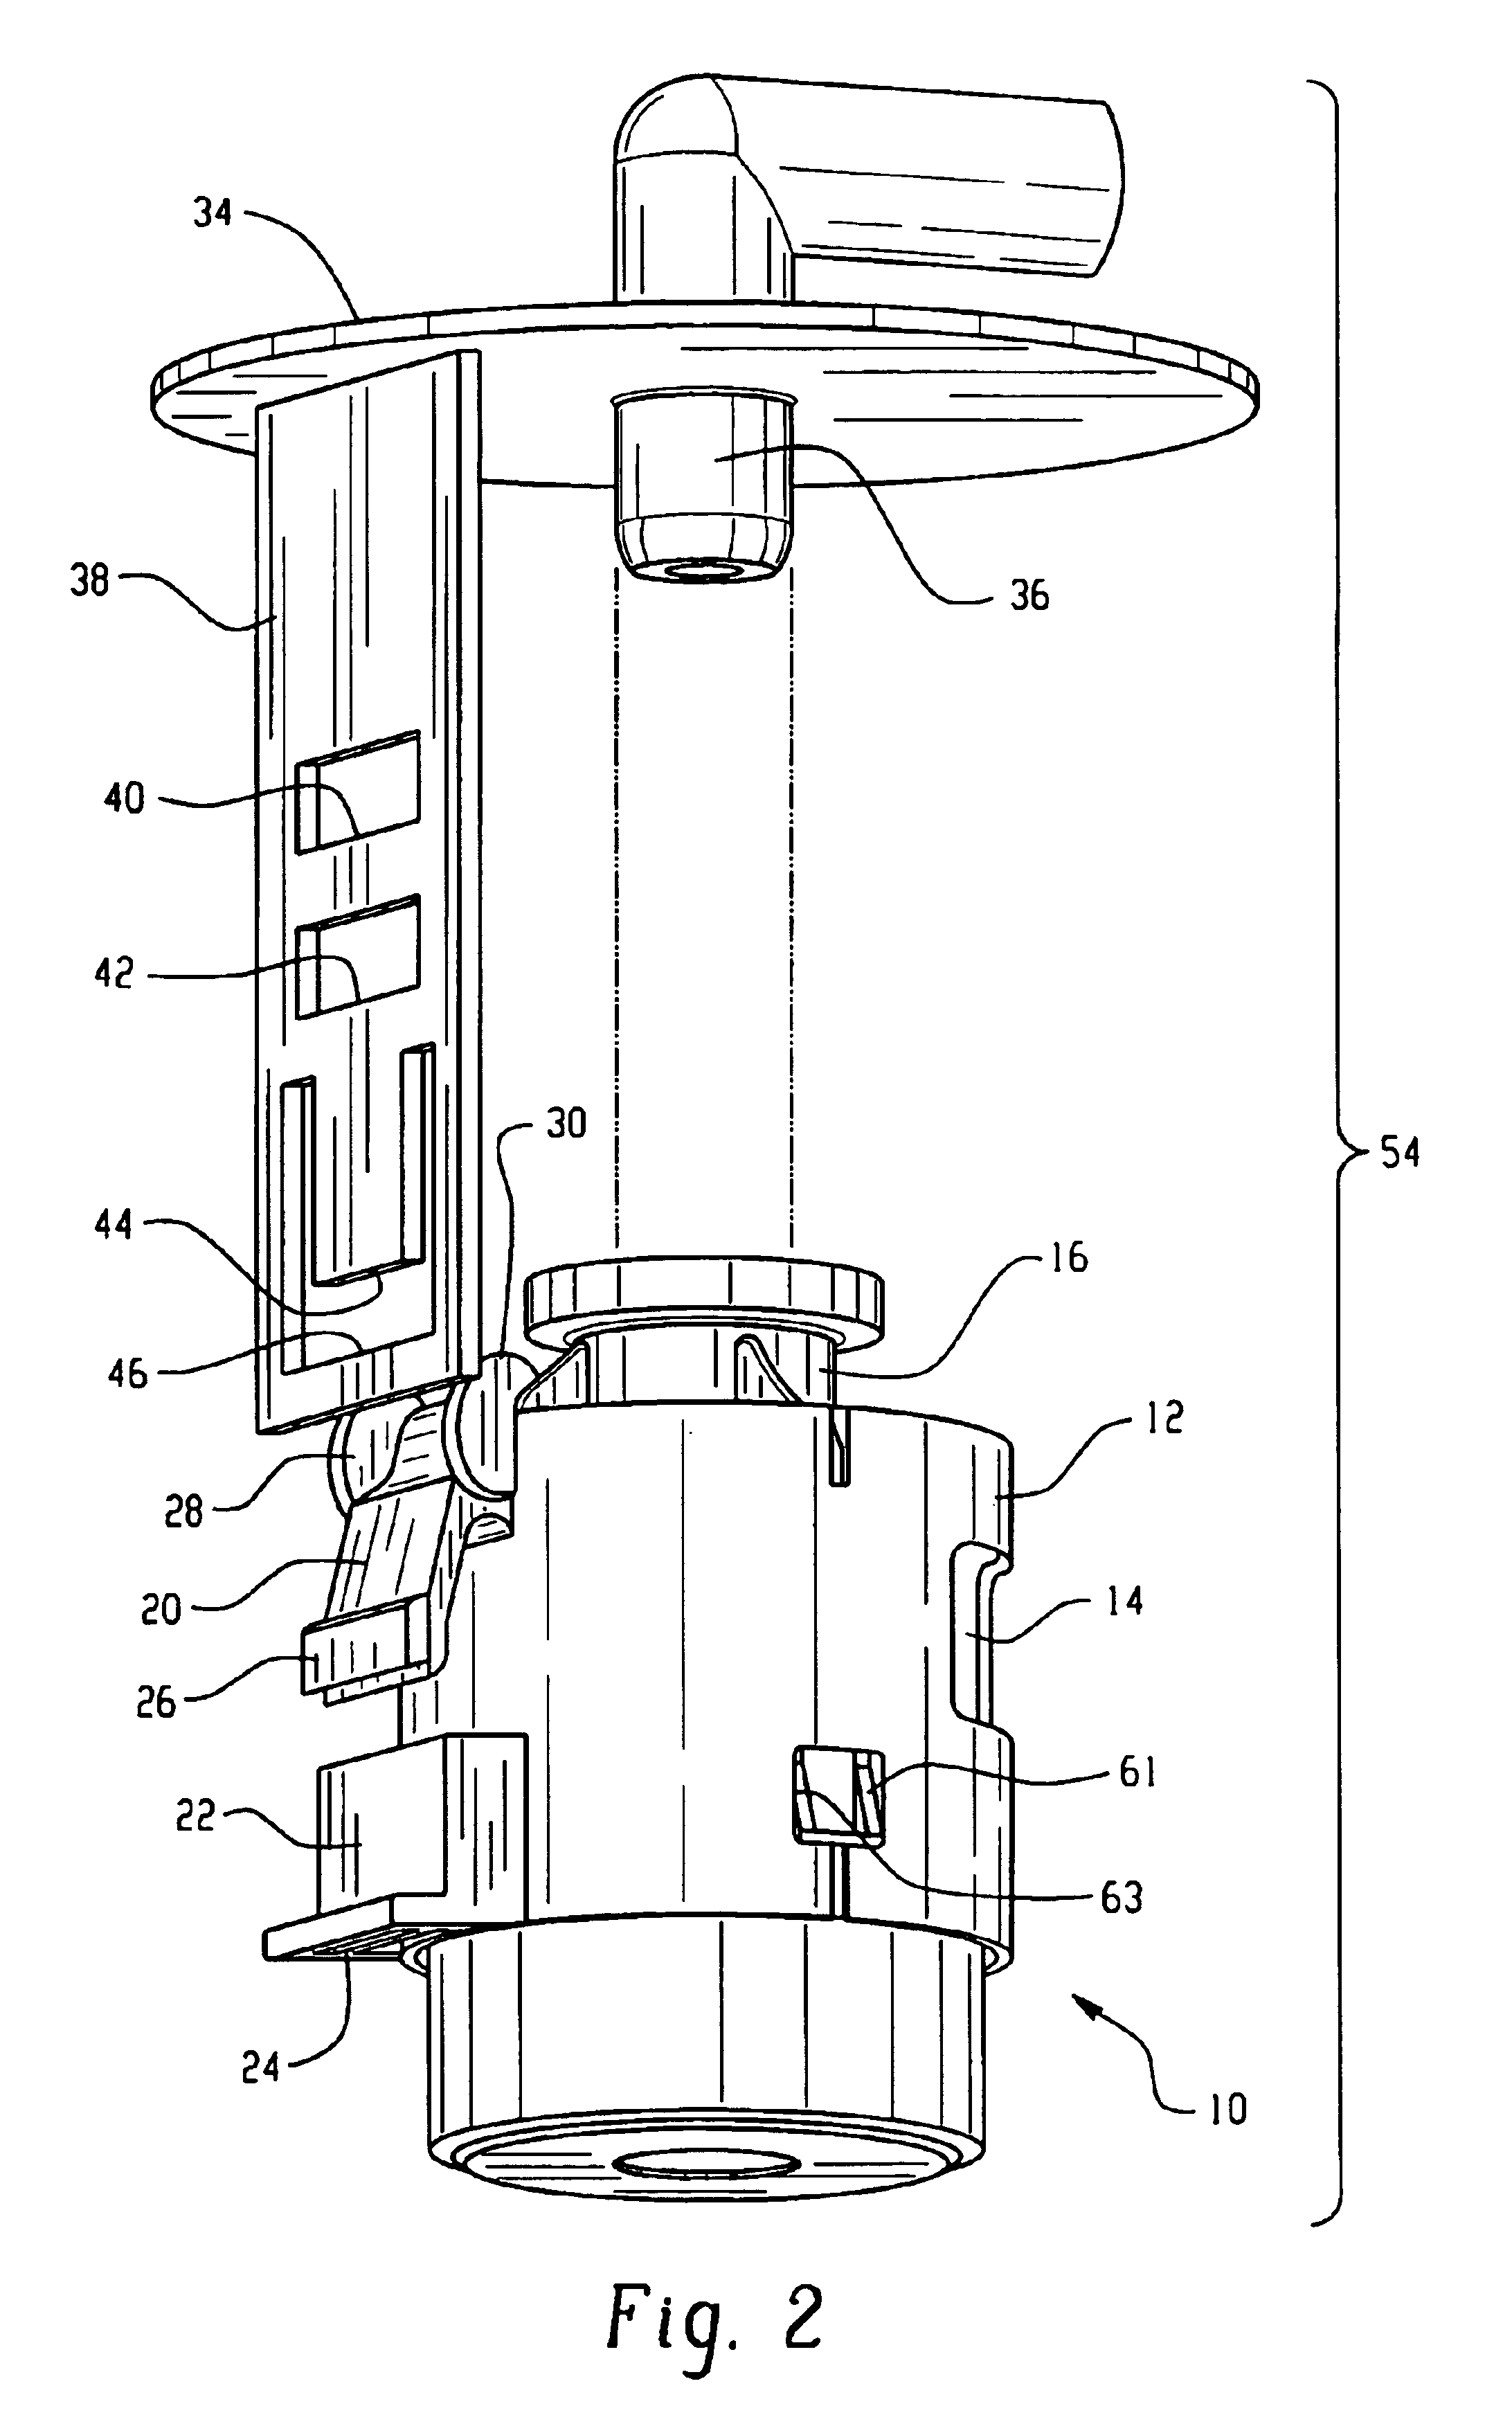 Mounting a fuel vapor management valve internally to a gas tank